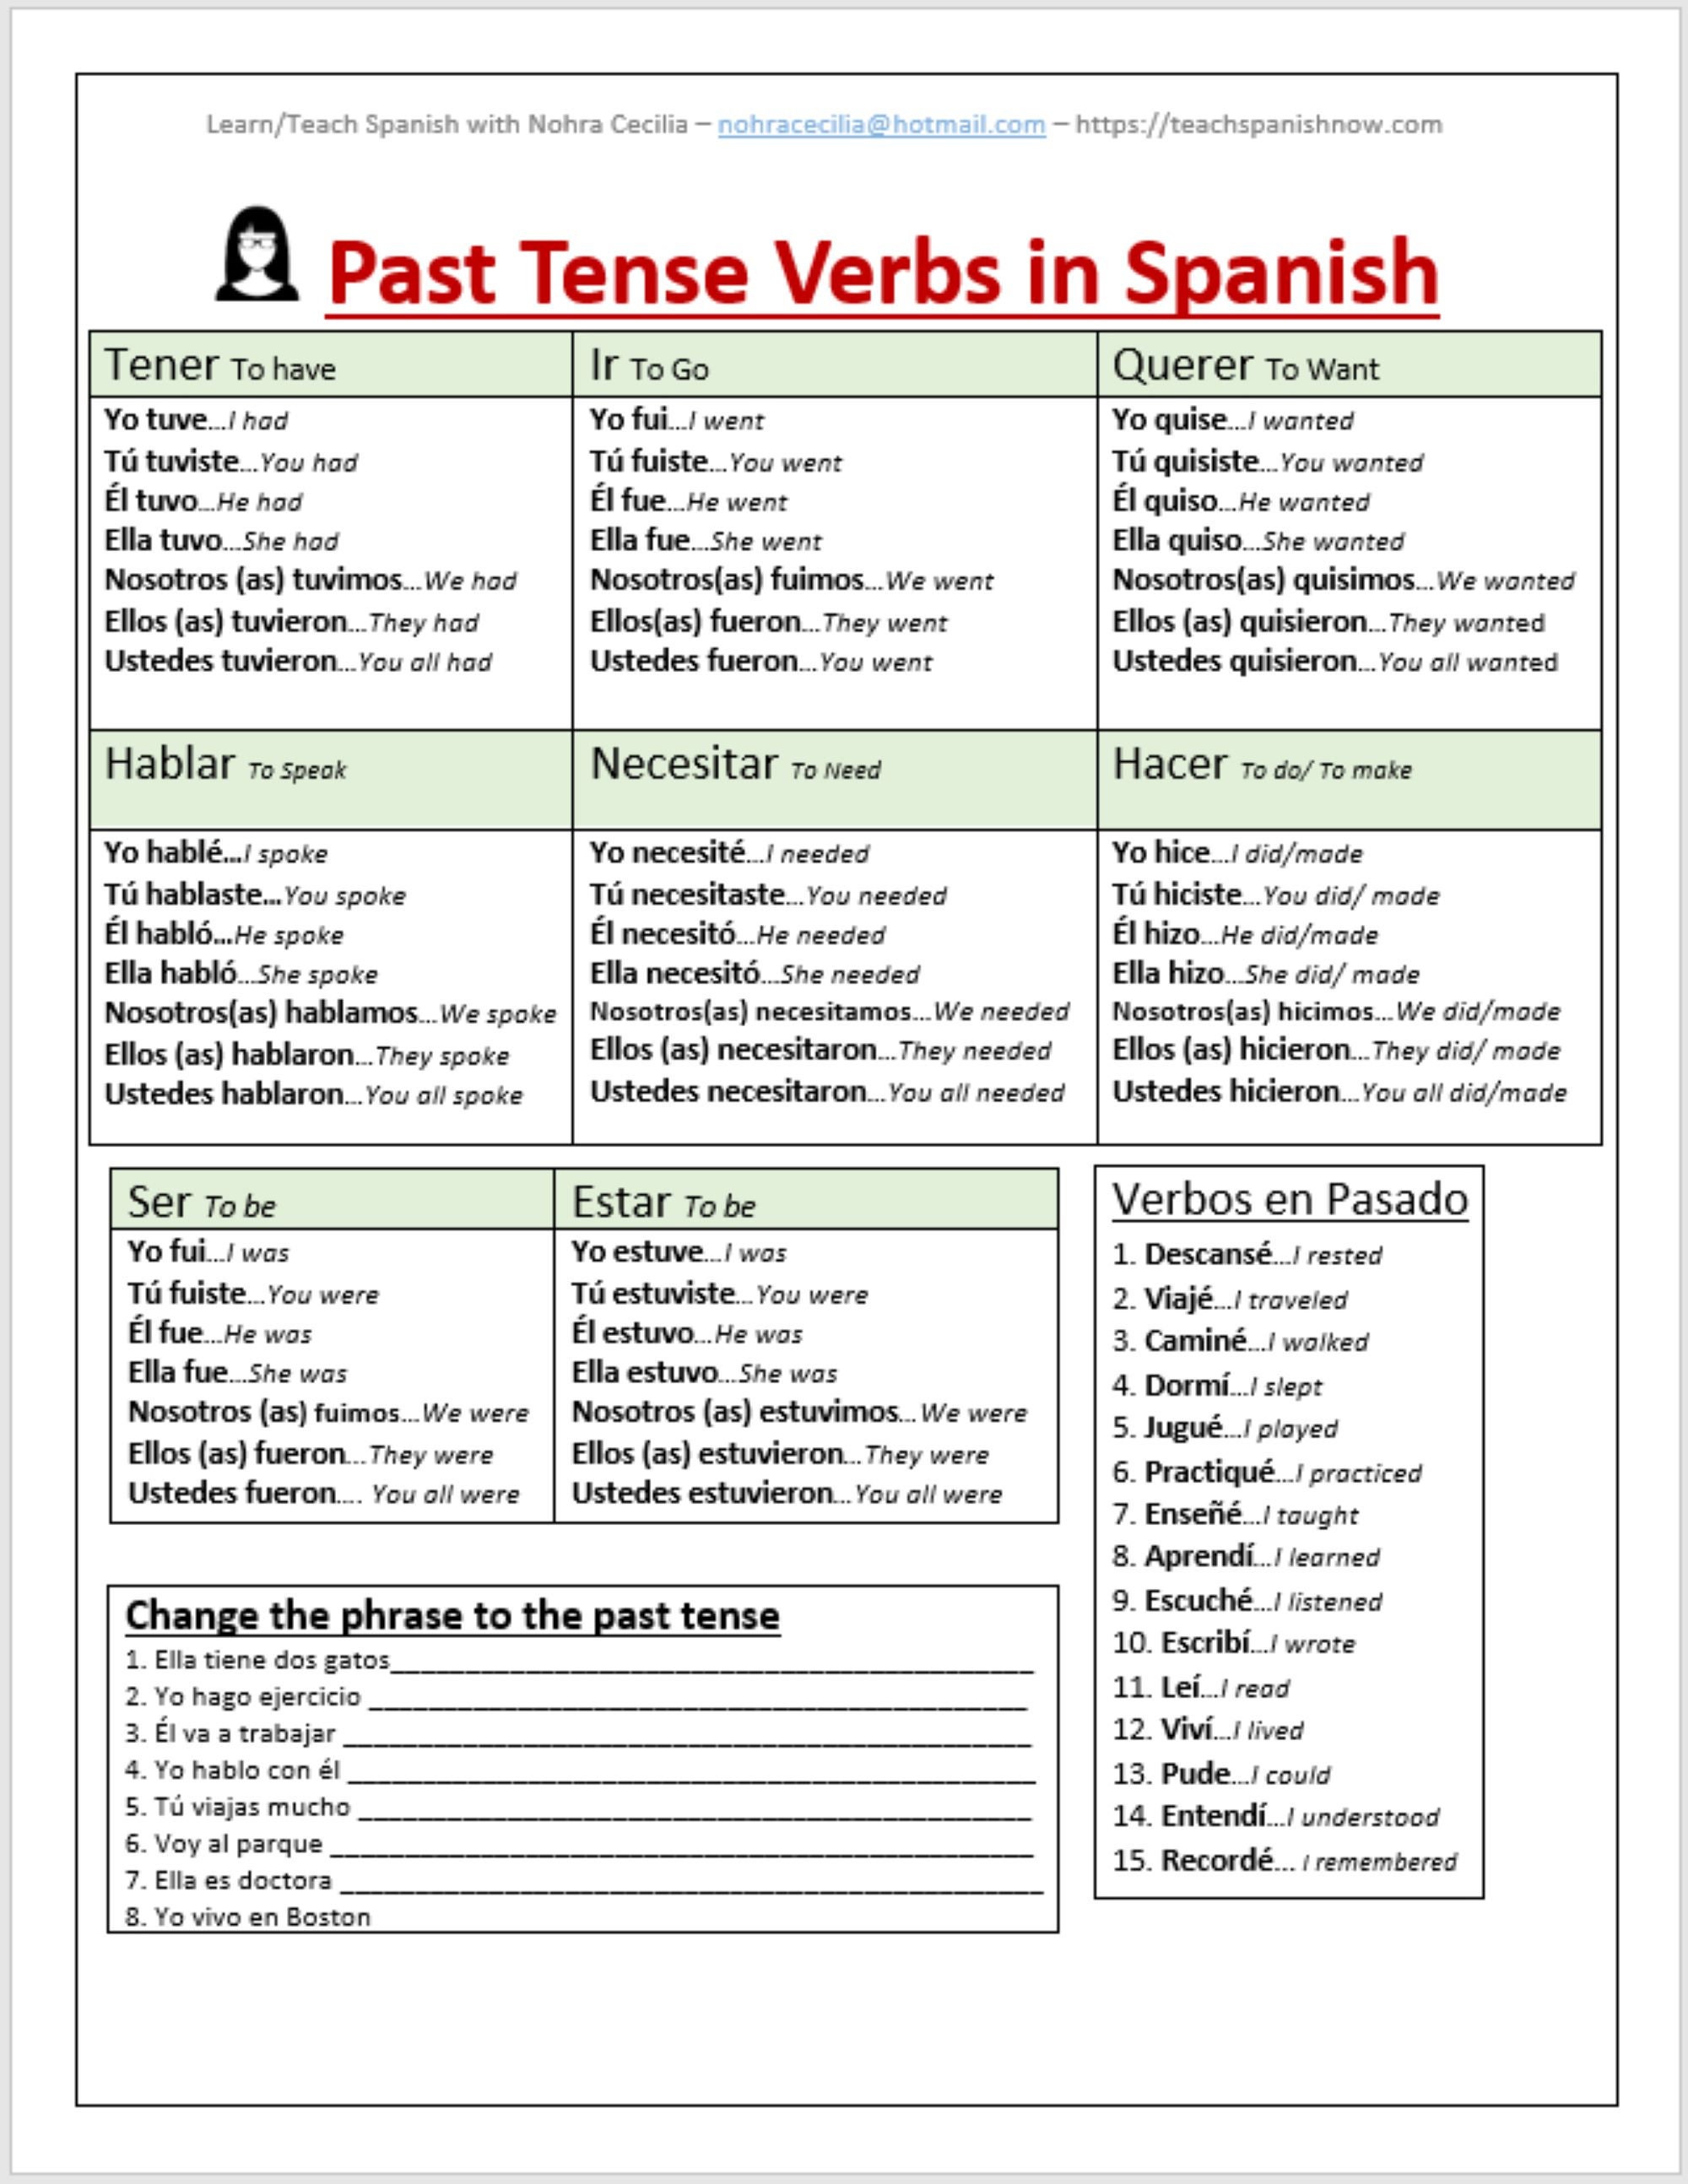 past-tense-verbs-in-spanish-etsy-uk